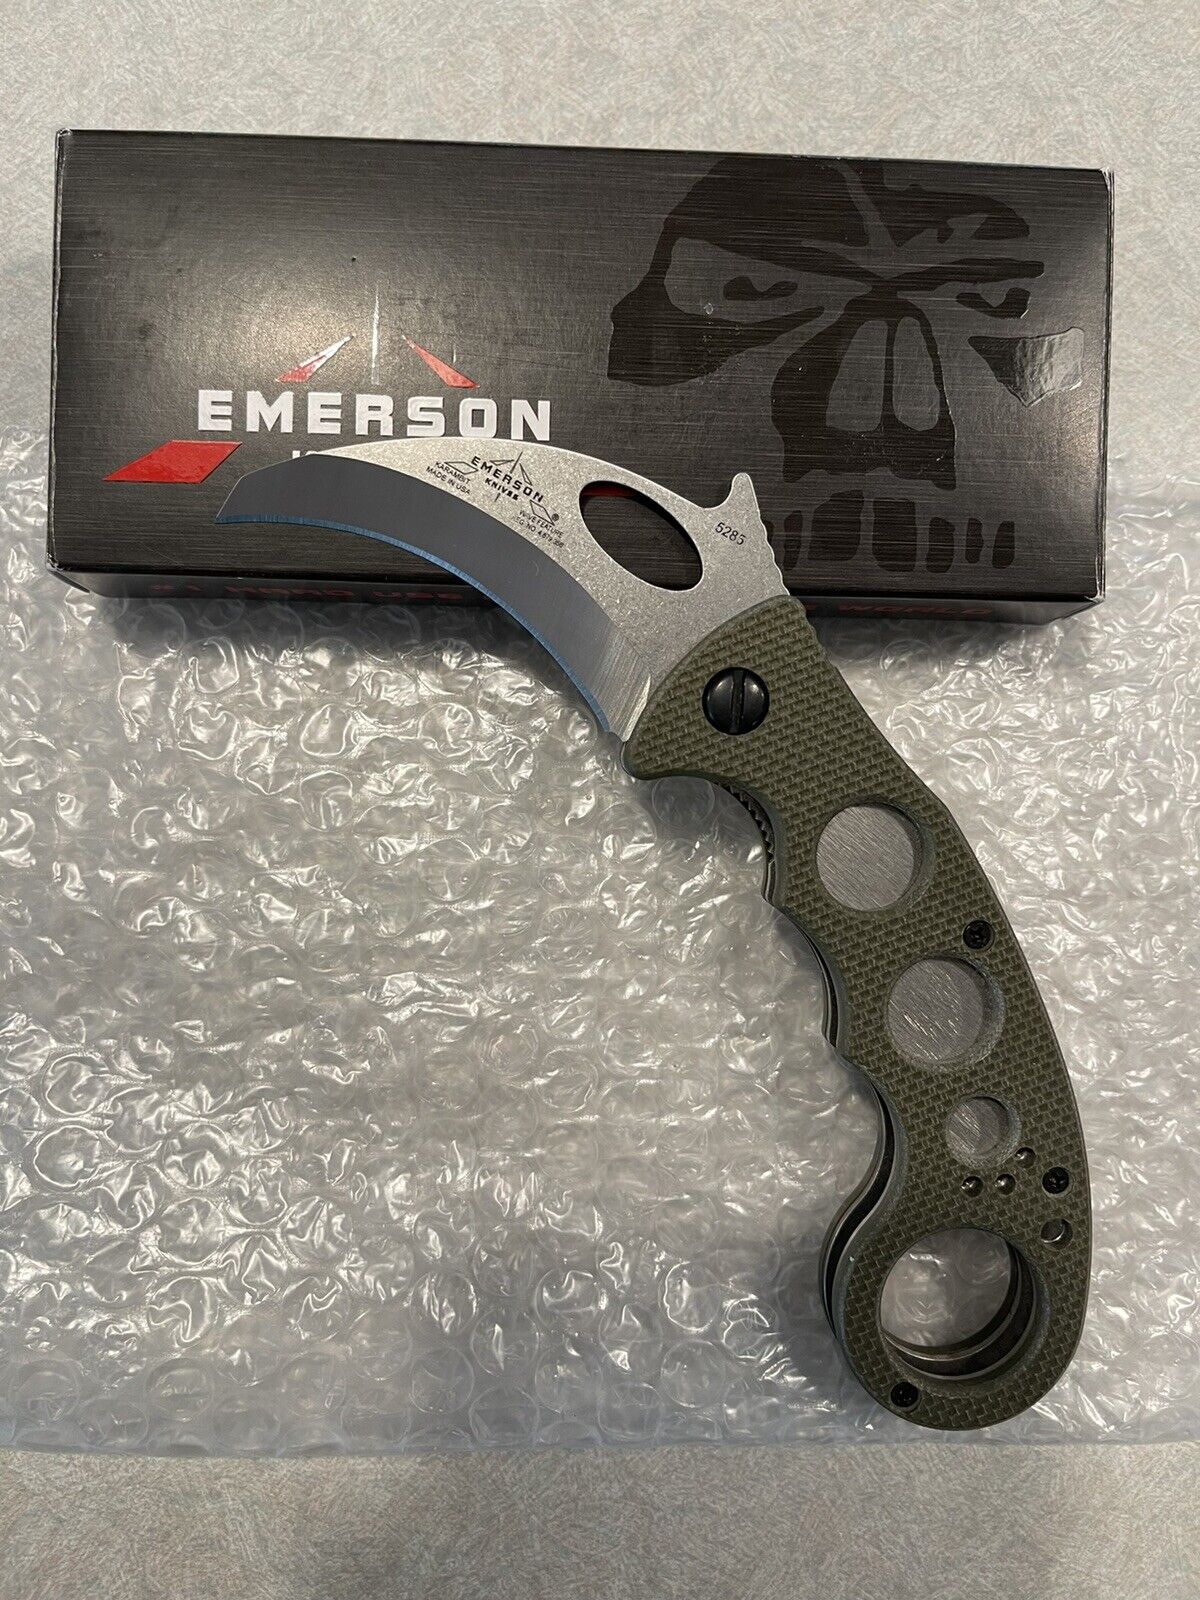 Emerson Knife Karambit OD Green Plain Edge Made in USA Looks Brand New.